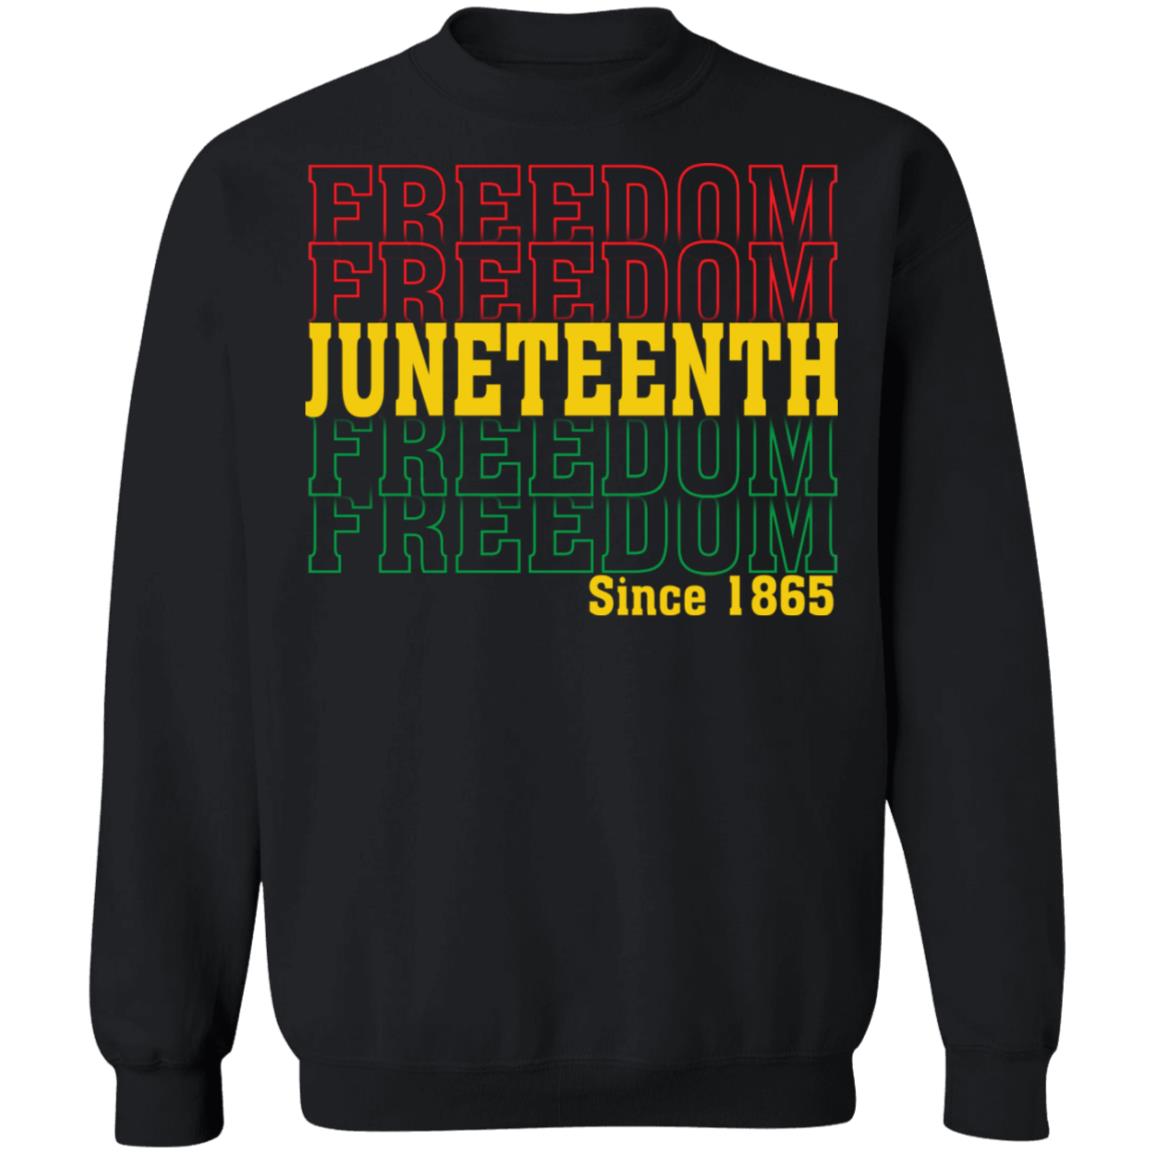 Juneteenth Freedom Since 1865 T-shirt Apparel Gearment Crewneck Sweatshirt Black S